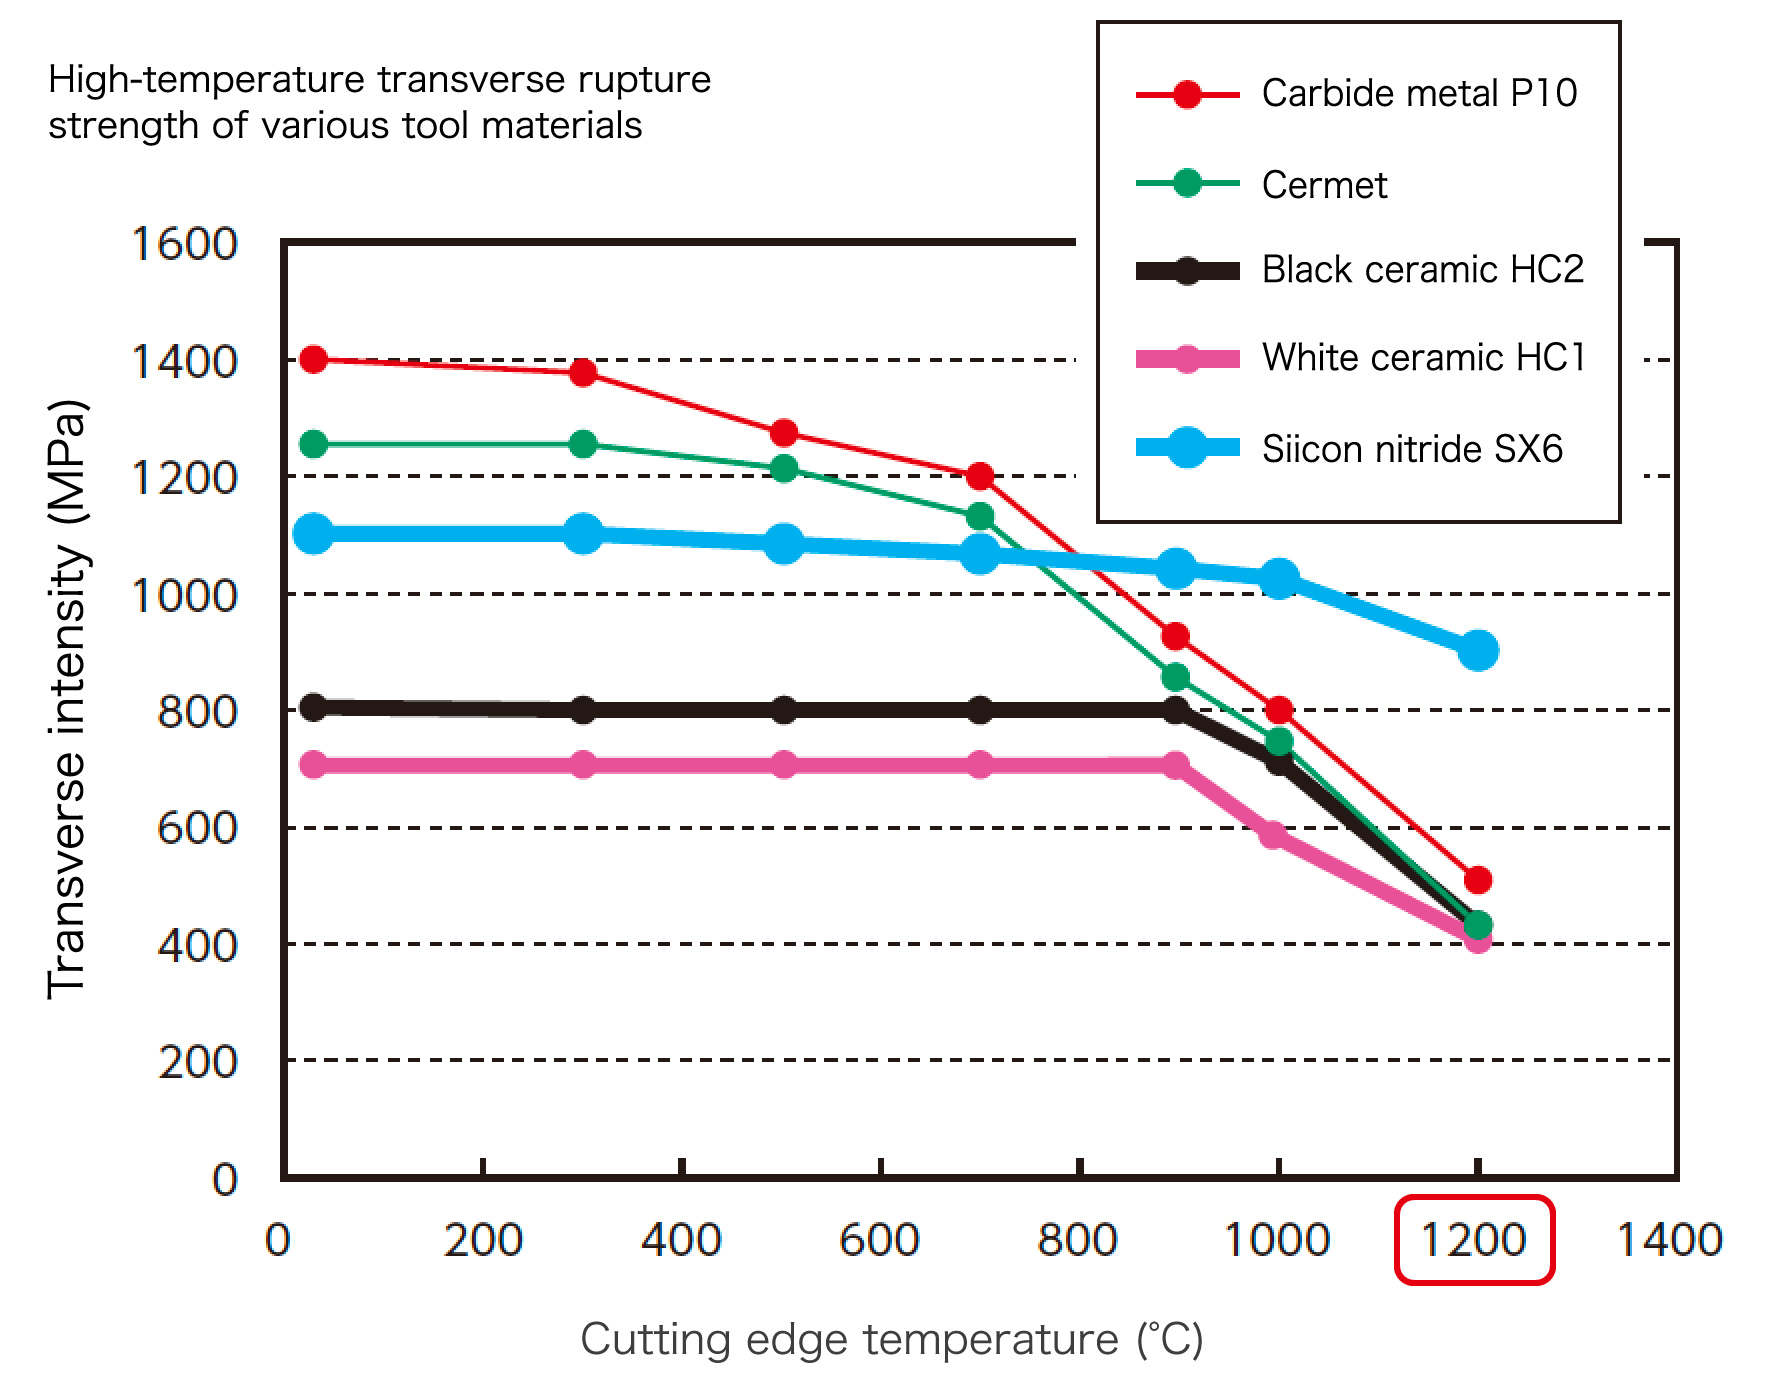 High-temperature transverse rupture strength of various tool materials